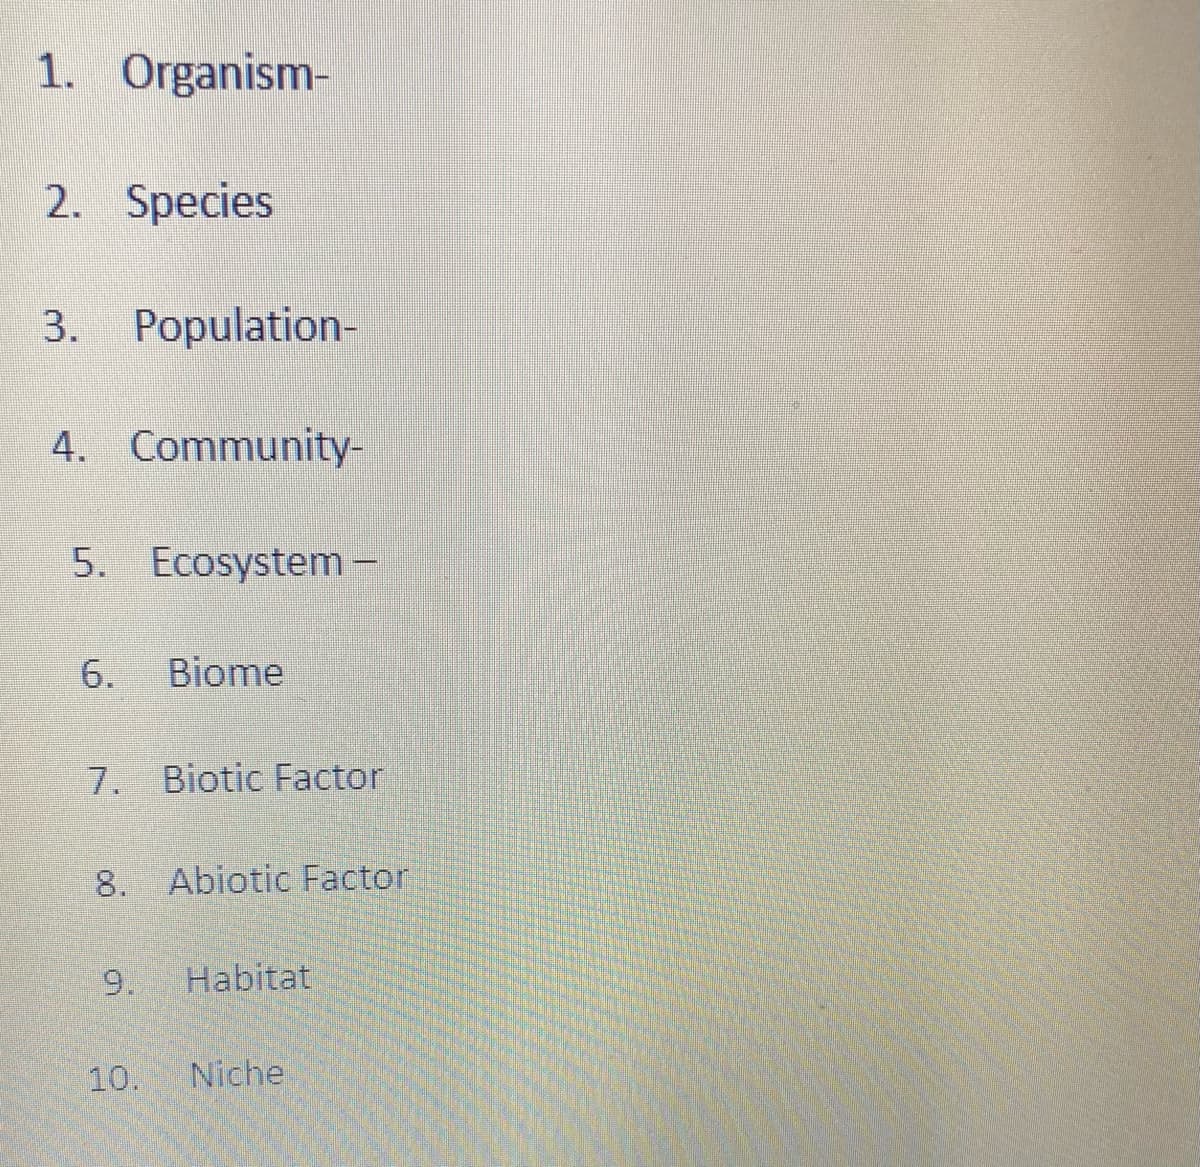 1. Organism-
2. Species
3. Population-
4. Community-
5. Ecosystem-
6.
Biome
7. Biotic Factor
8. Abiotic Factor
9.
Habitat
10.
Niche
